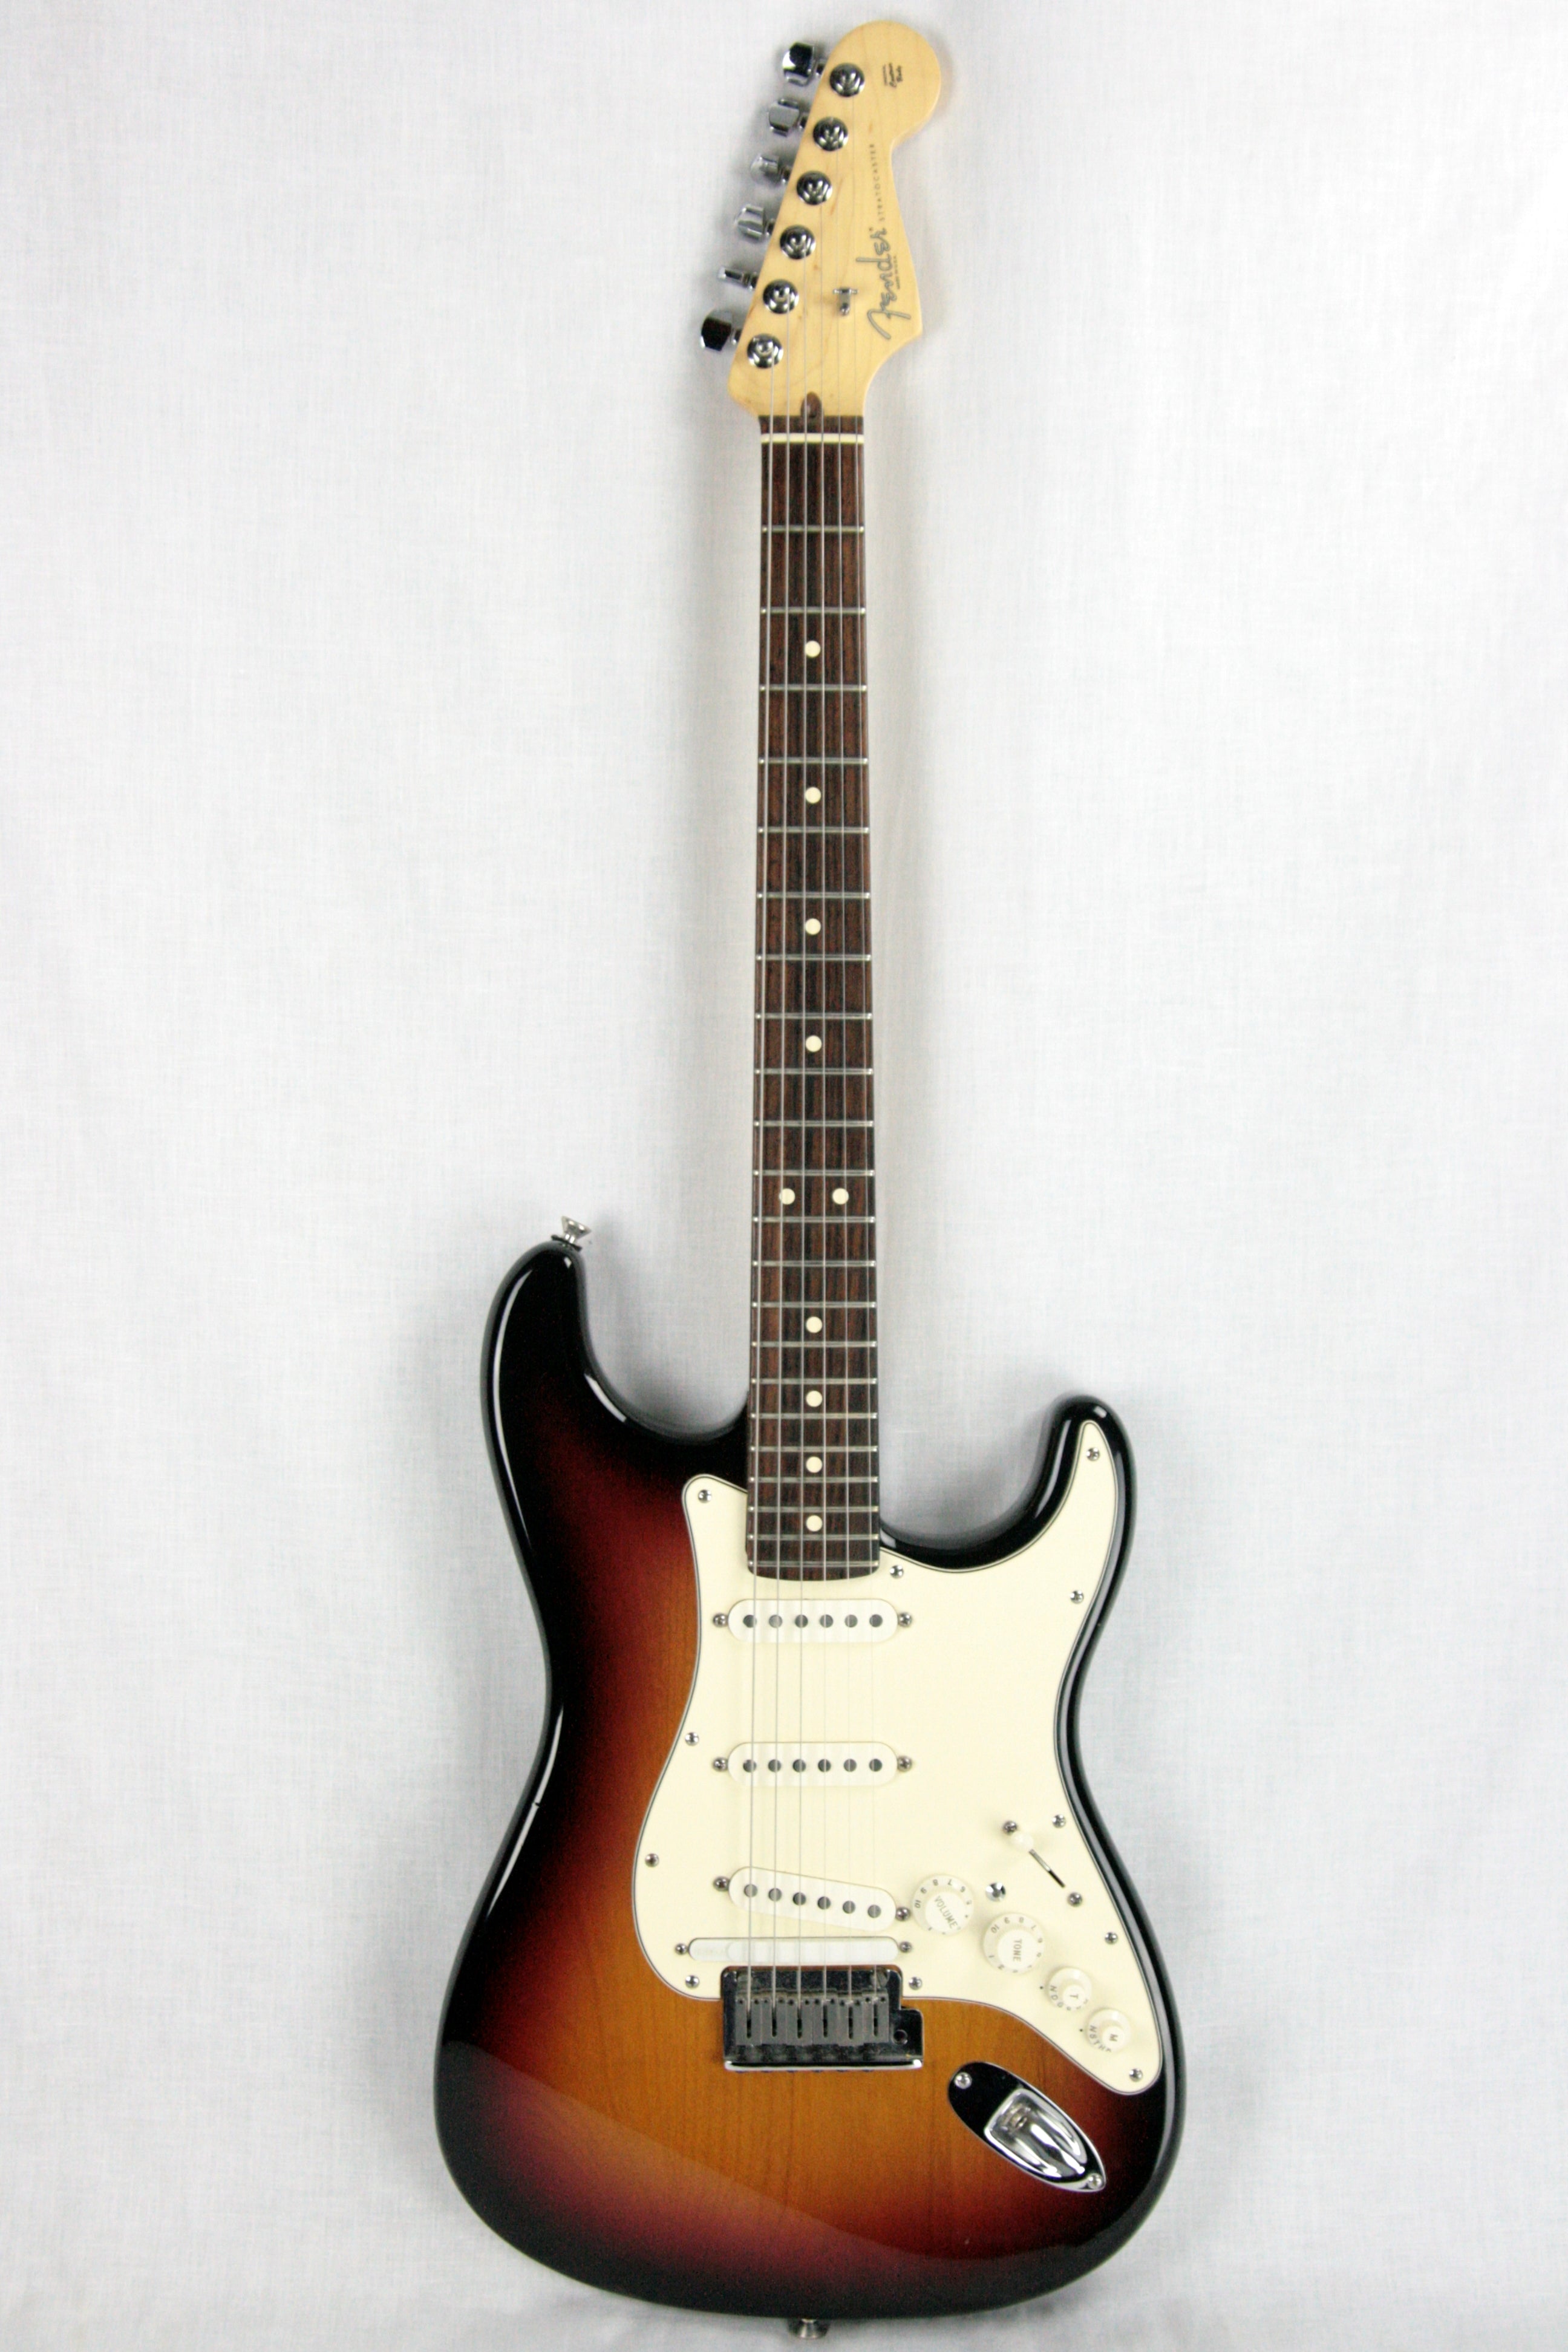 *SOLD*  2006 Fender American VG Stratocaster Virtual Guitar Strat! USA Sunburst Rosewood Neck